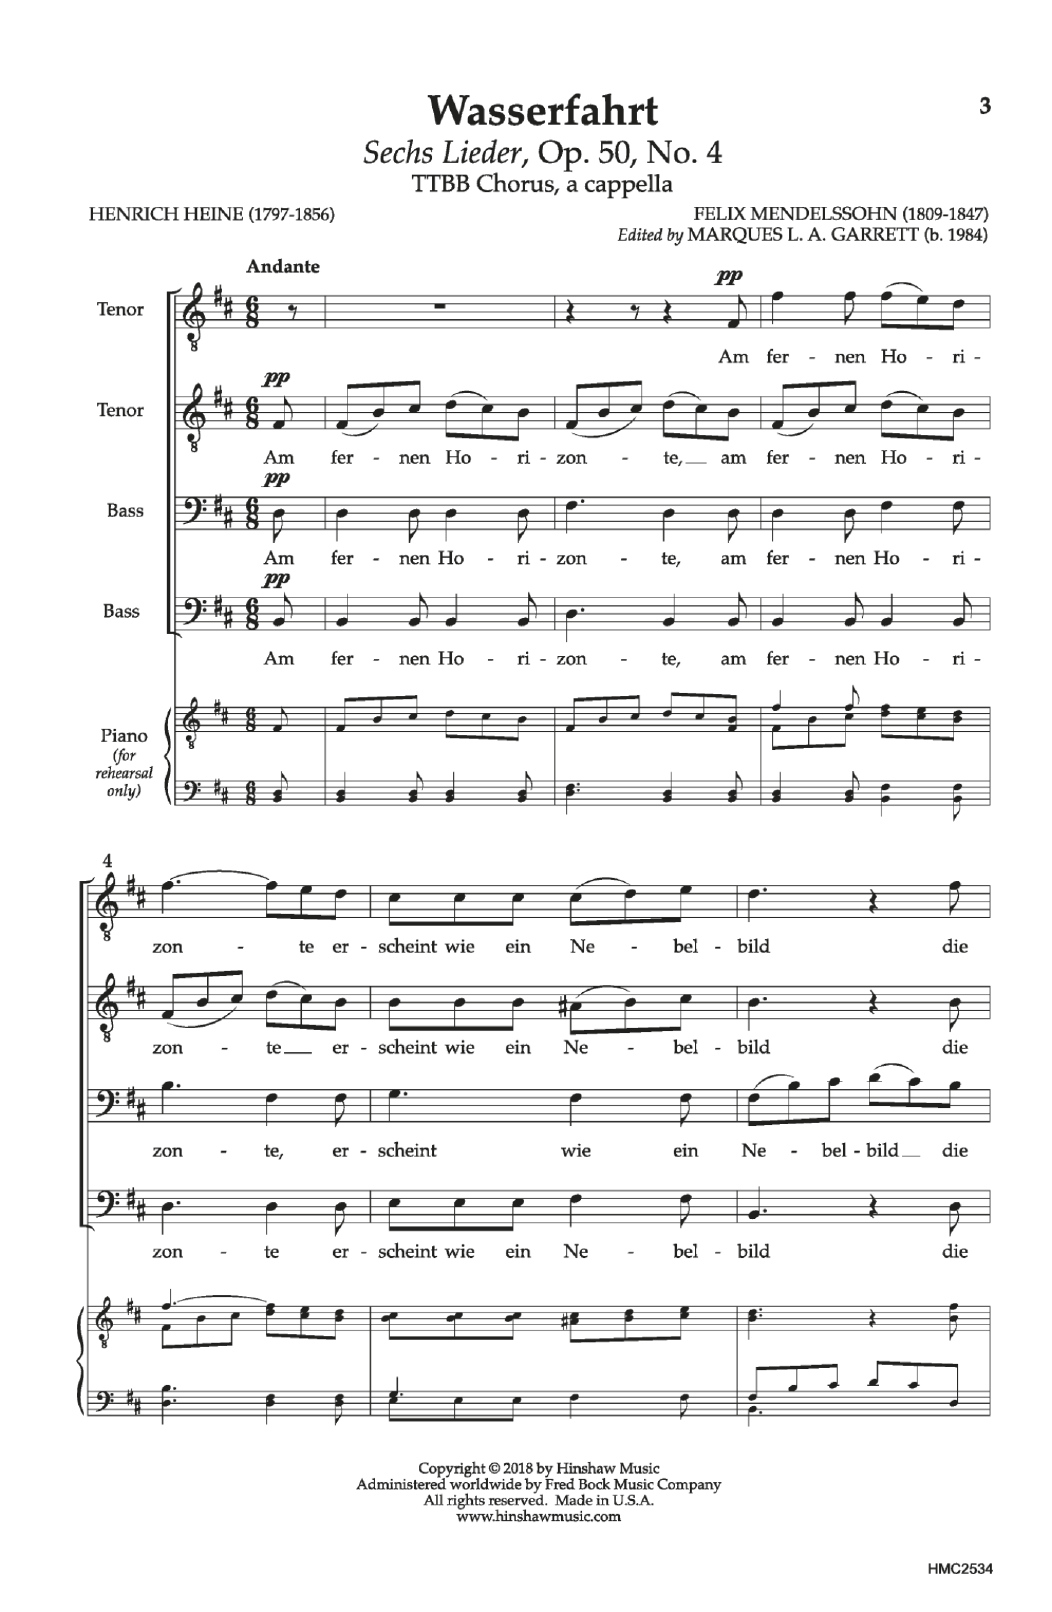 Felix Mendelssohn Wasserfahrt Sheet Music Notes & Chords for Choral - Download or Print PDF